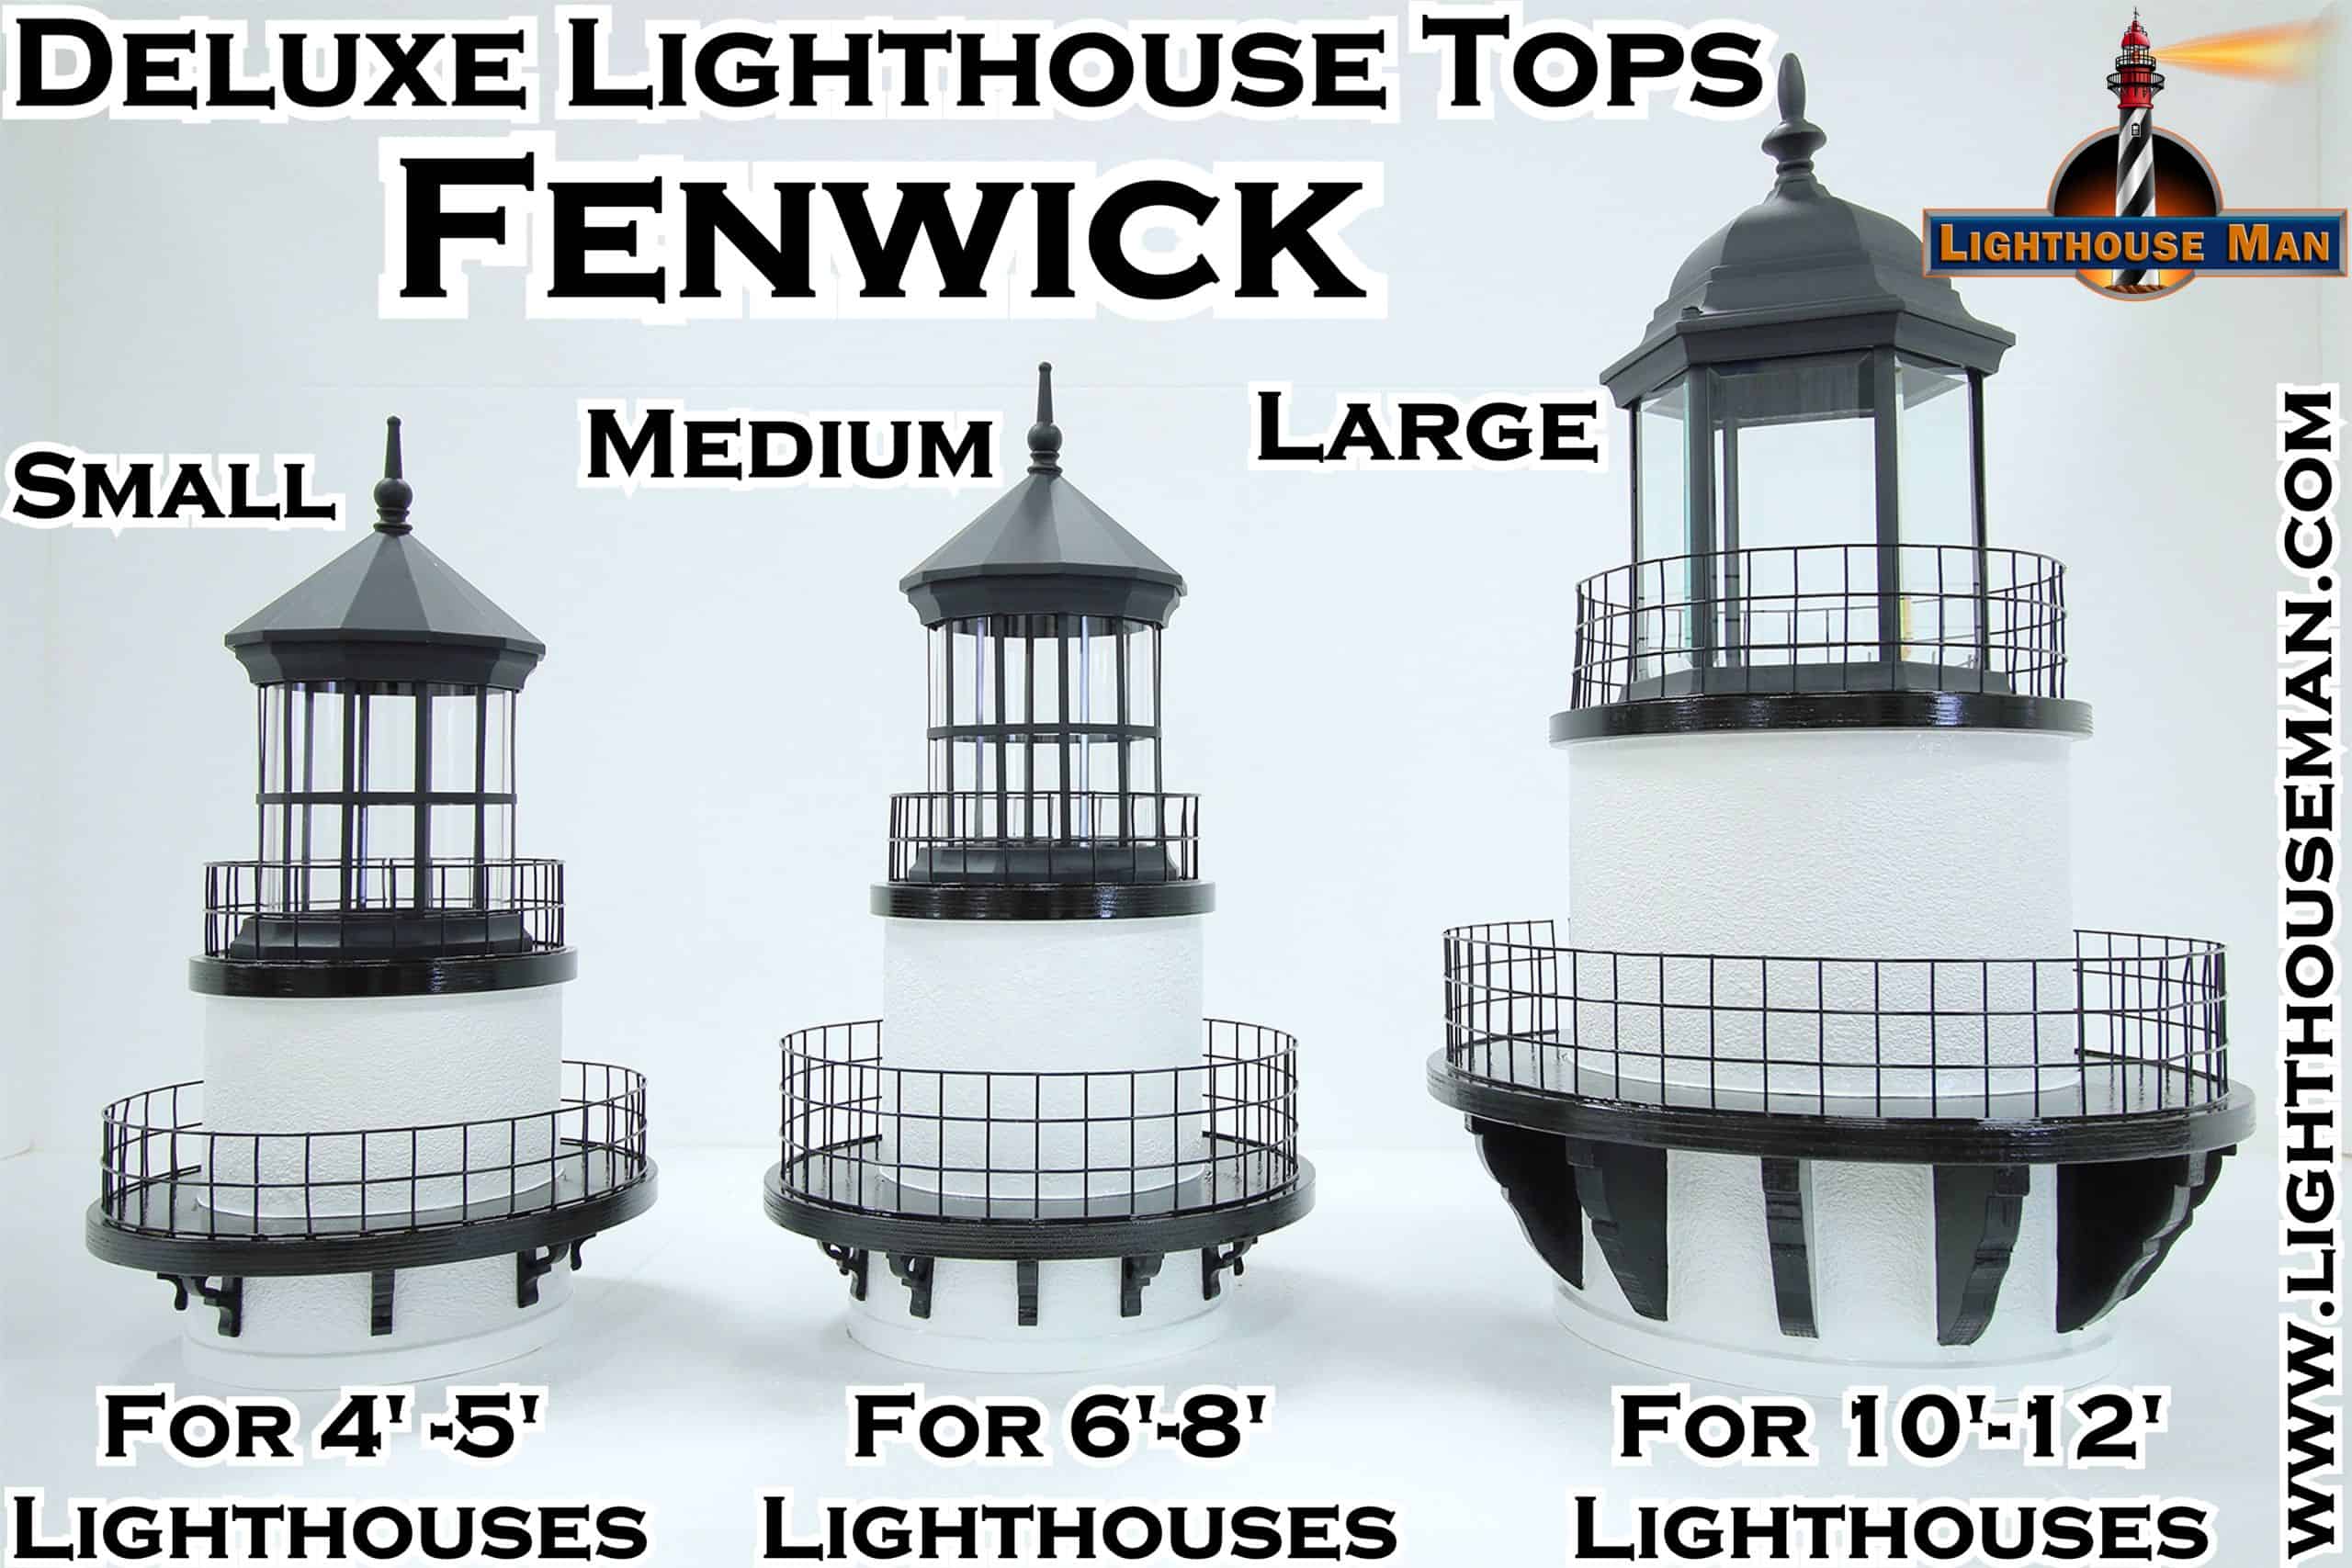 Deluxe Fenwick Lighthouse Tops